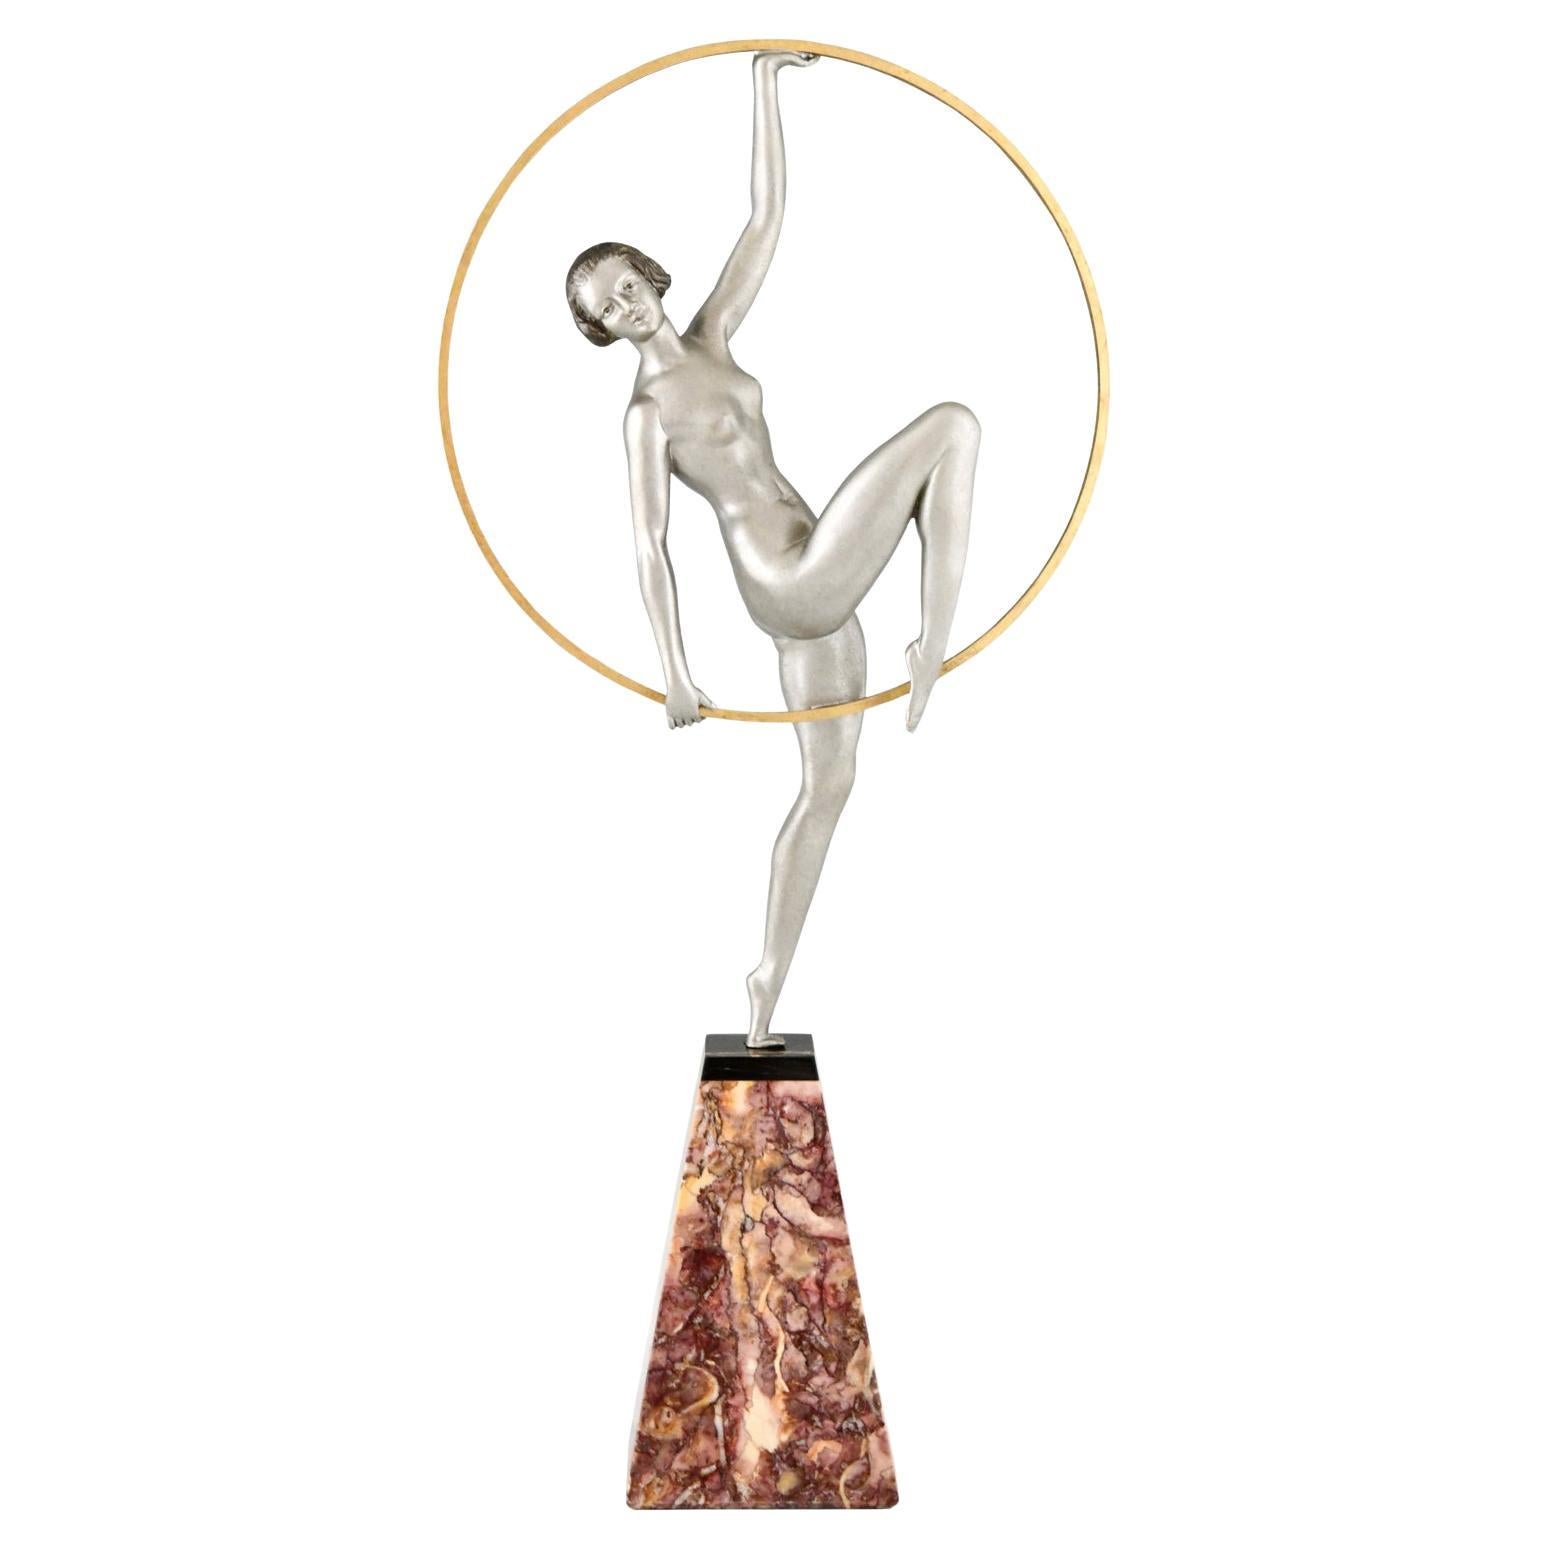 Art Deco sculpture hoop dancer by Limousin France 1930 For Sale